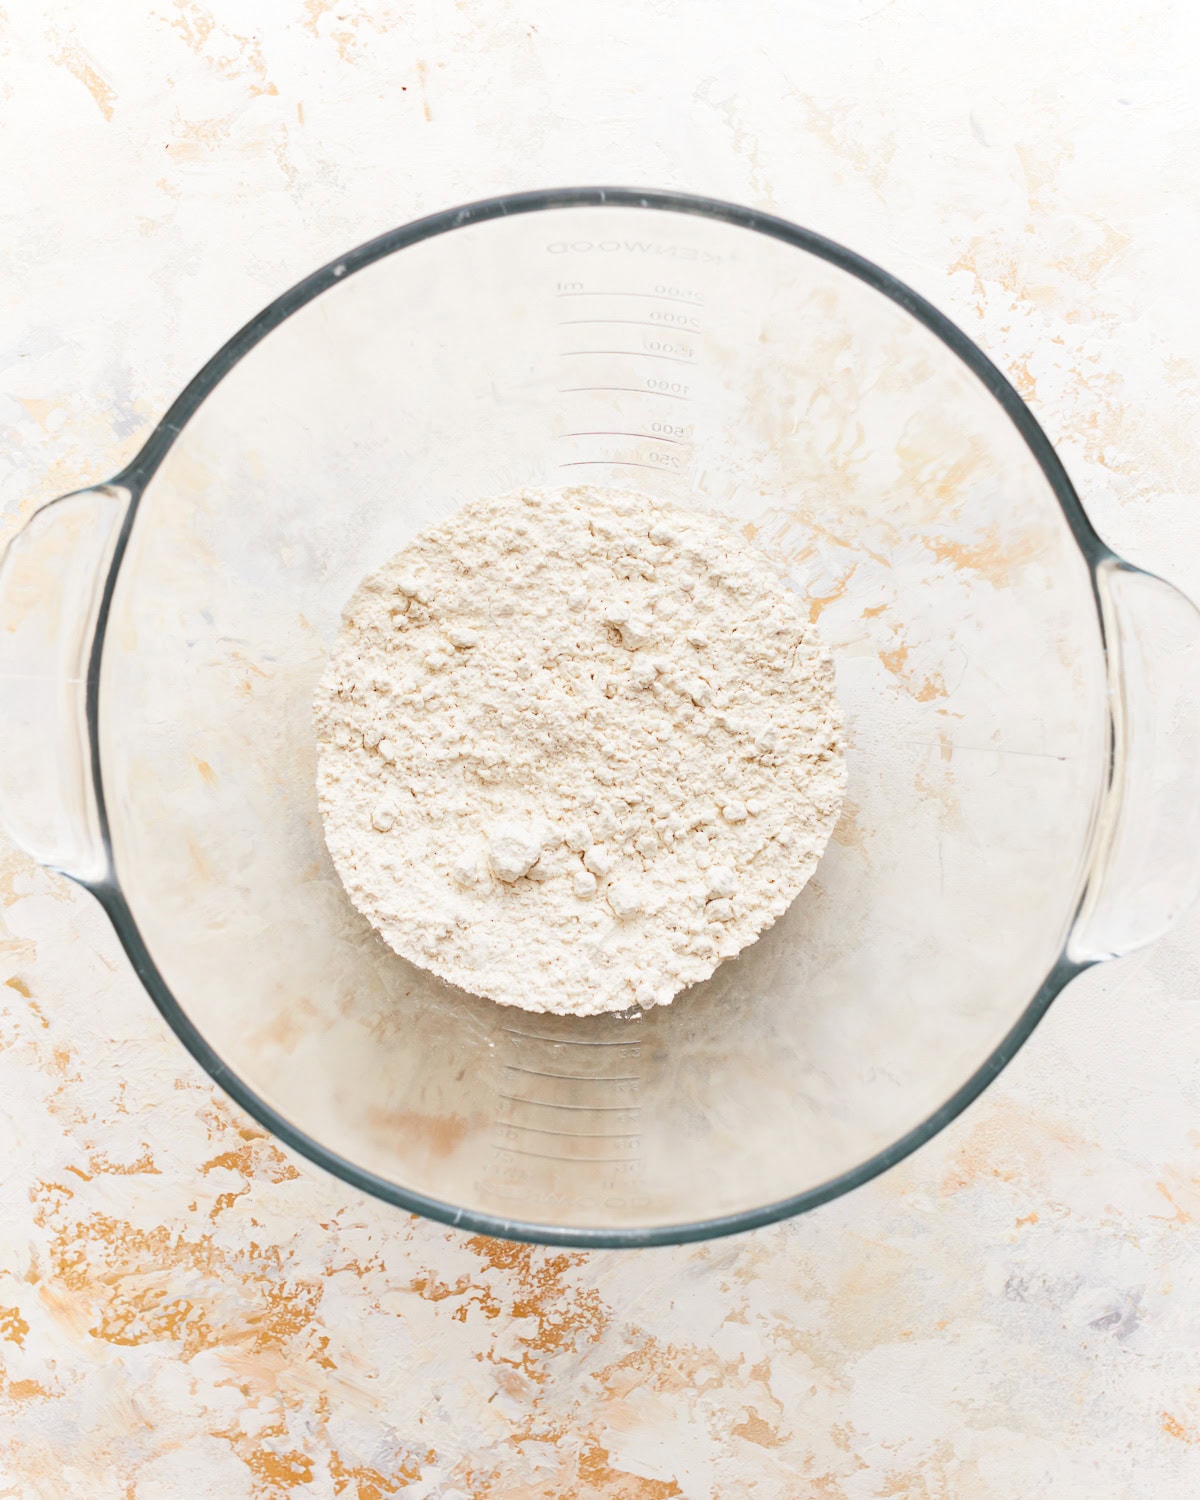 gluten-free flour in a glass bowl.